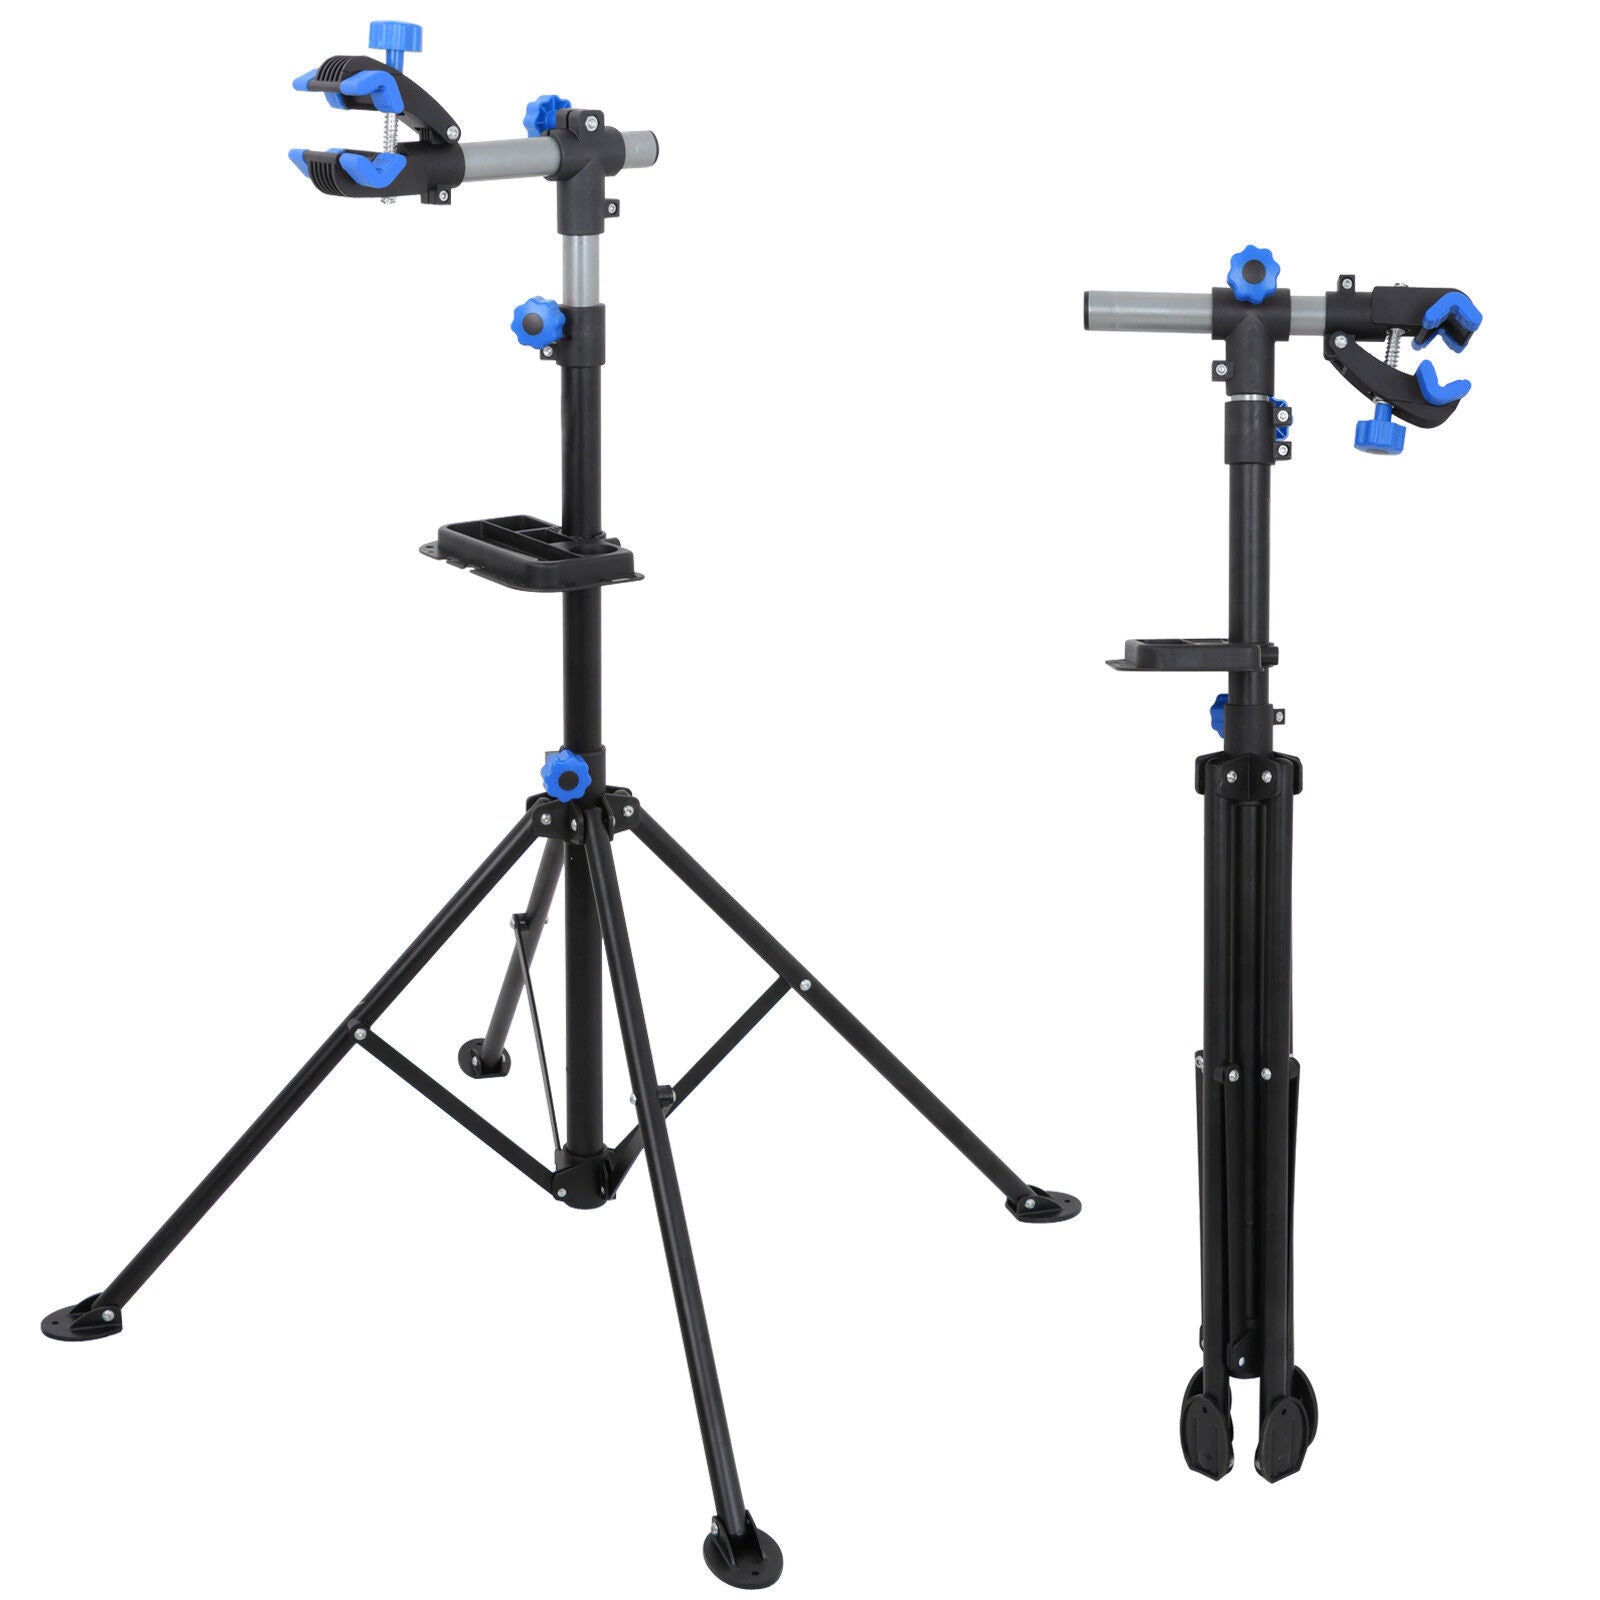 Bike Adjustable 42 - 74' Bicycle Rack Repair Stand w/Tool Tray &Telescopic Arm